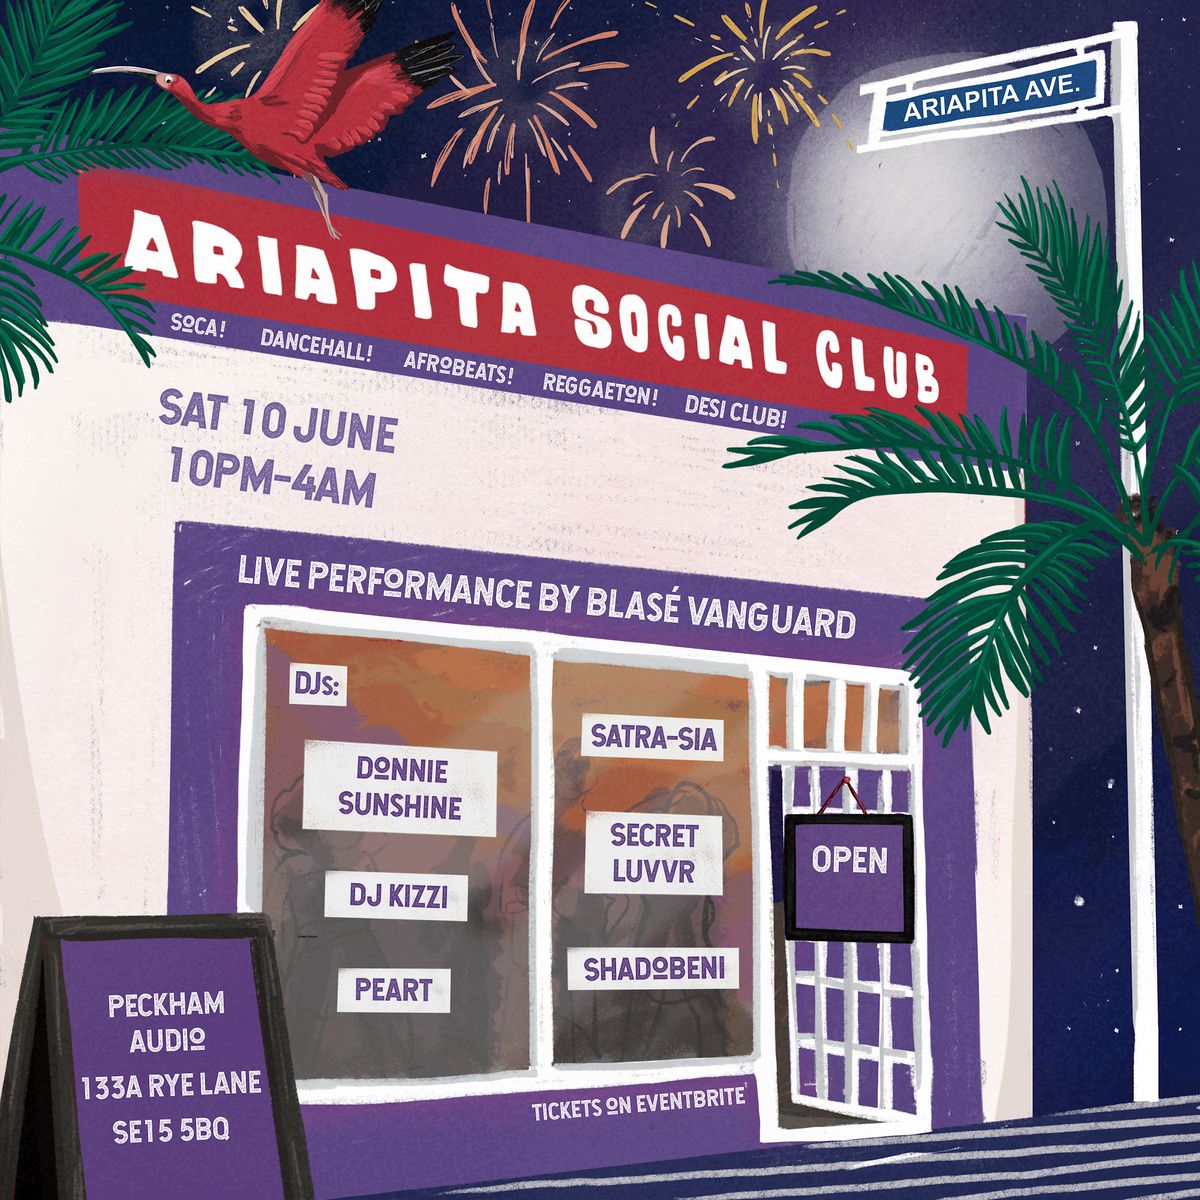 Ariapita Social Club goes South! Soca Dancehall Afrobeats Reggaeton Desi